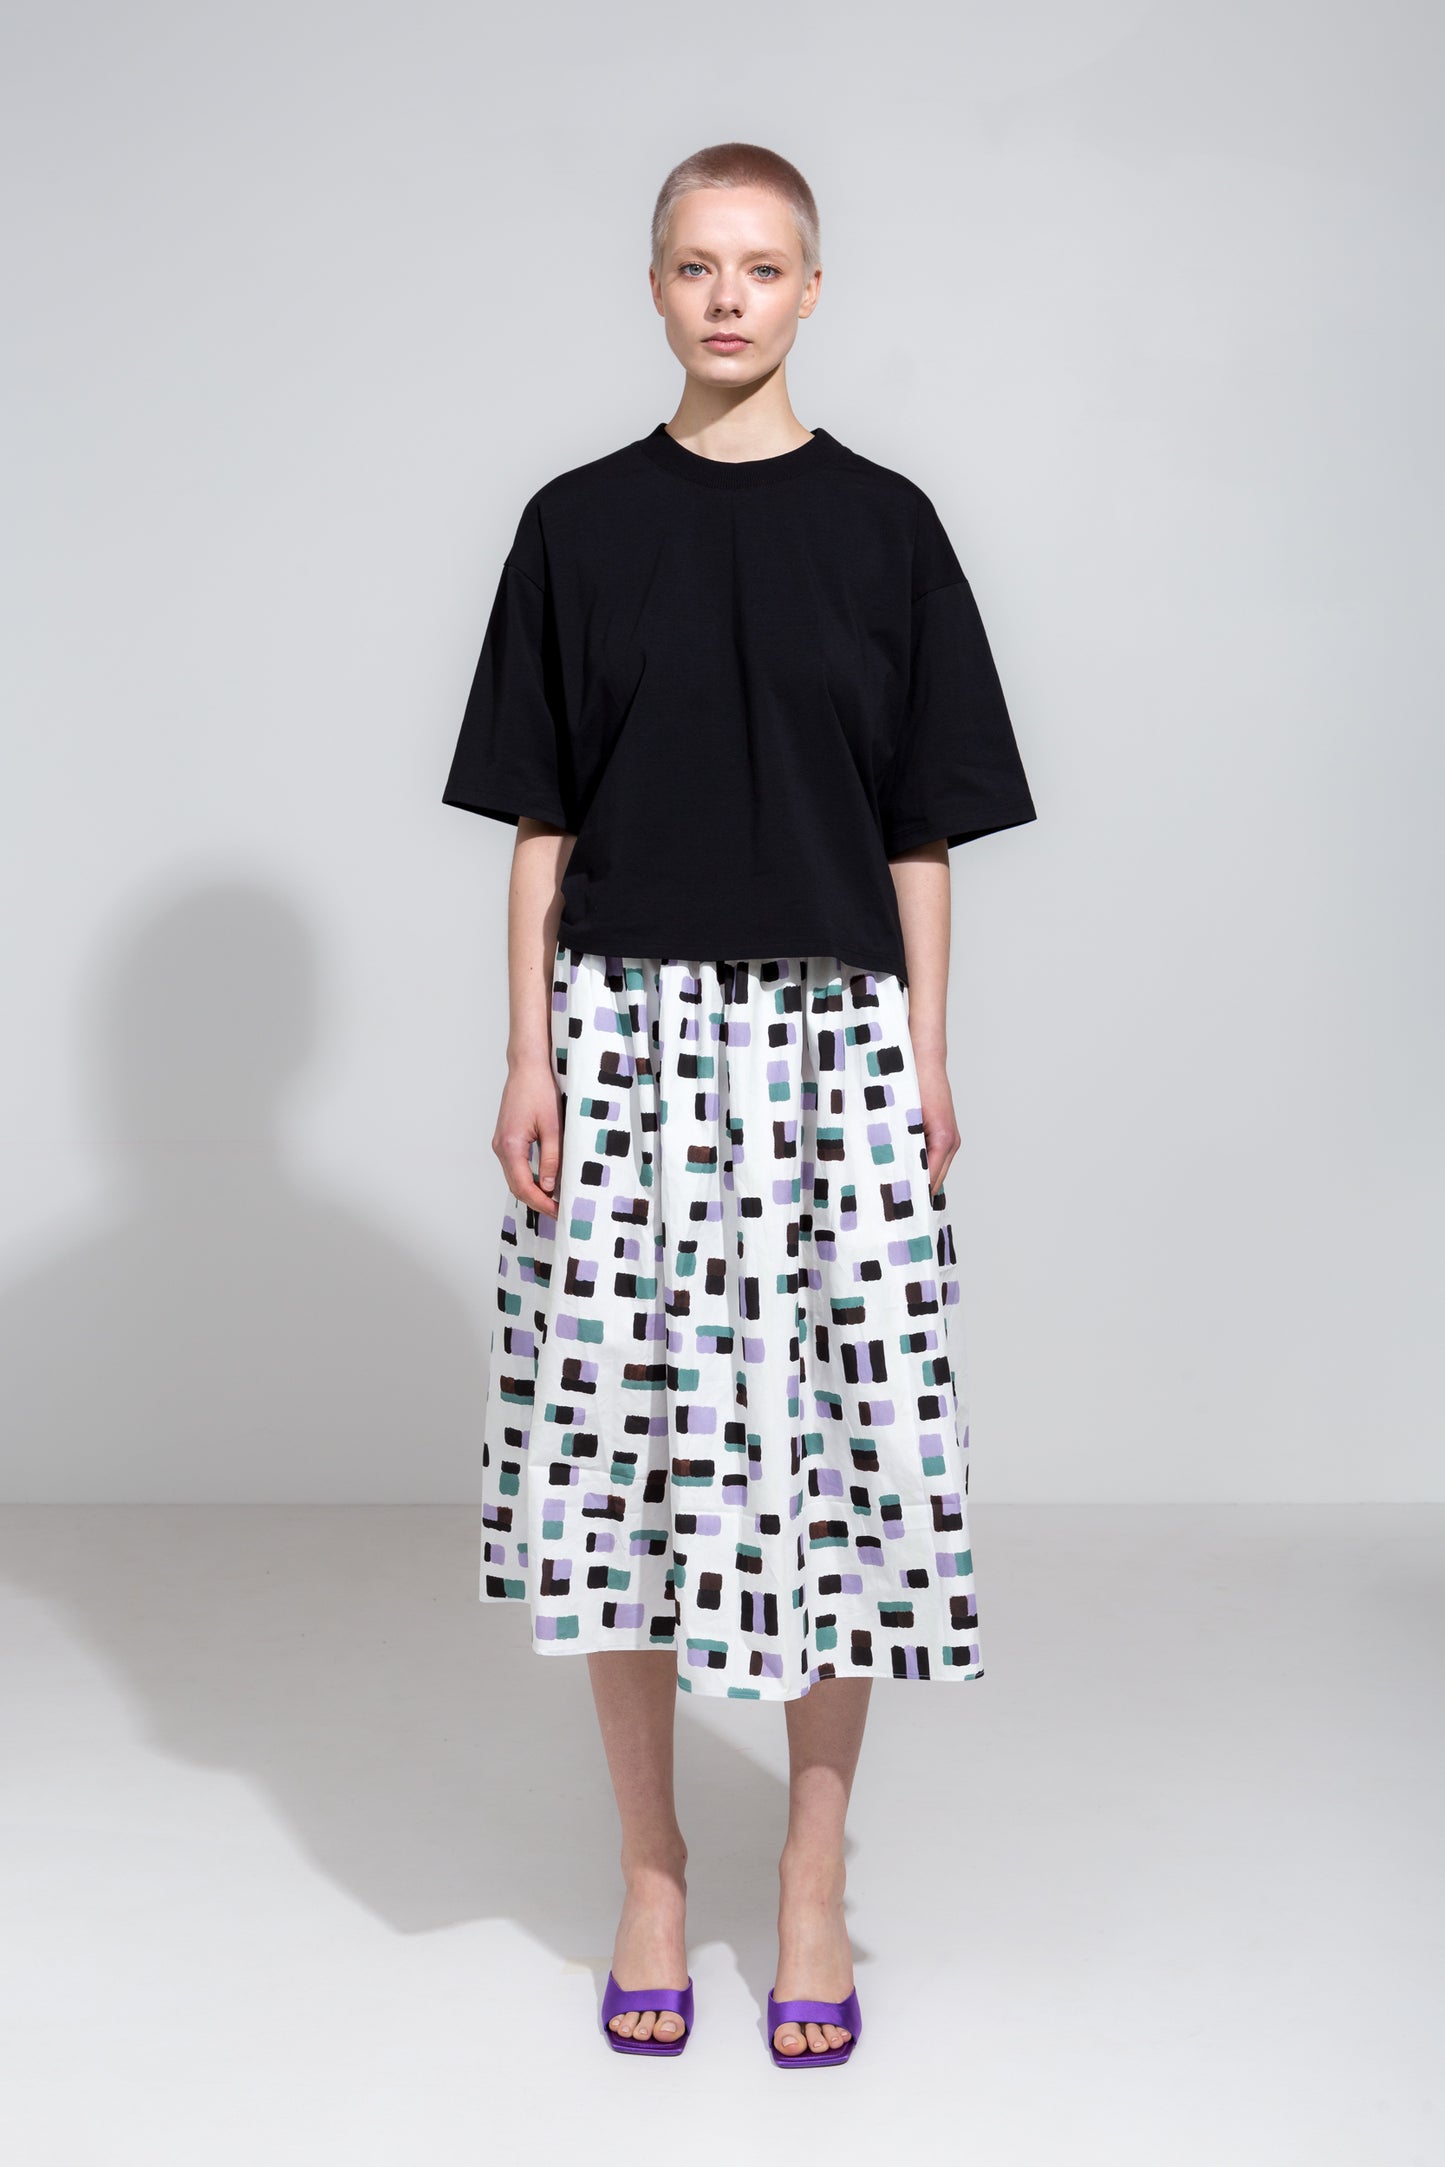 Midi skirt in print and organic cotton black oversize t-shirt